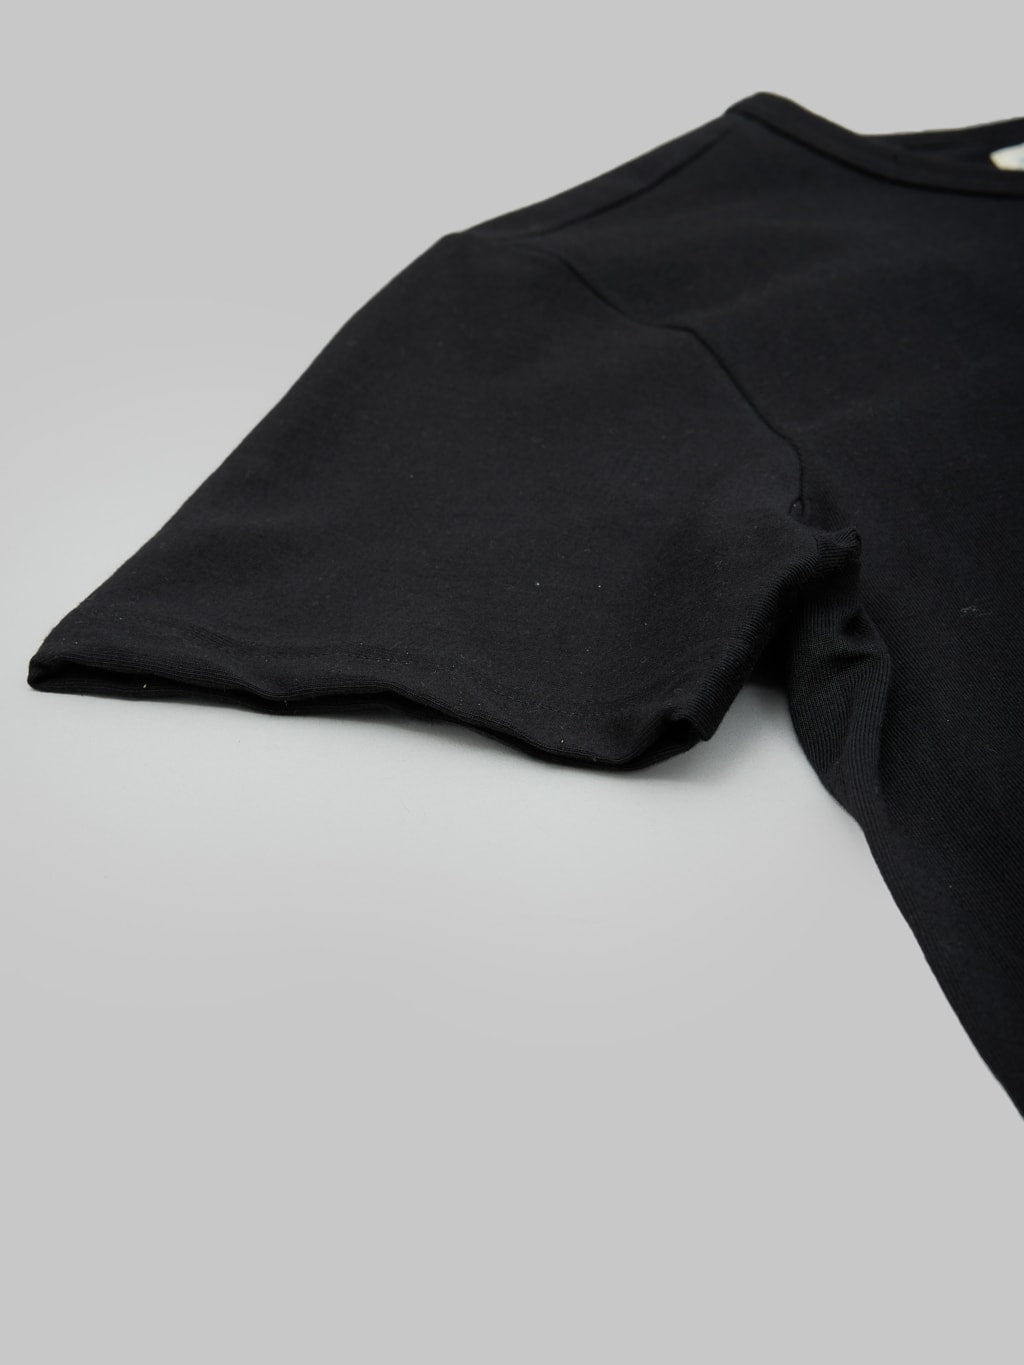 Merz b Schwanen 1950s Loopwheeled Classic TShirt Black sleeve